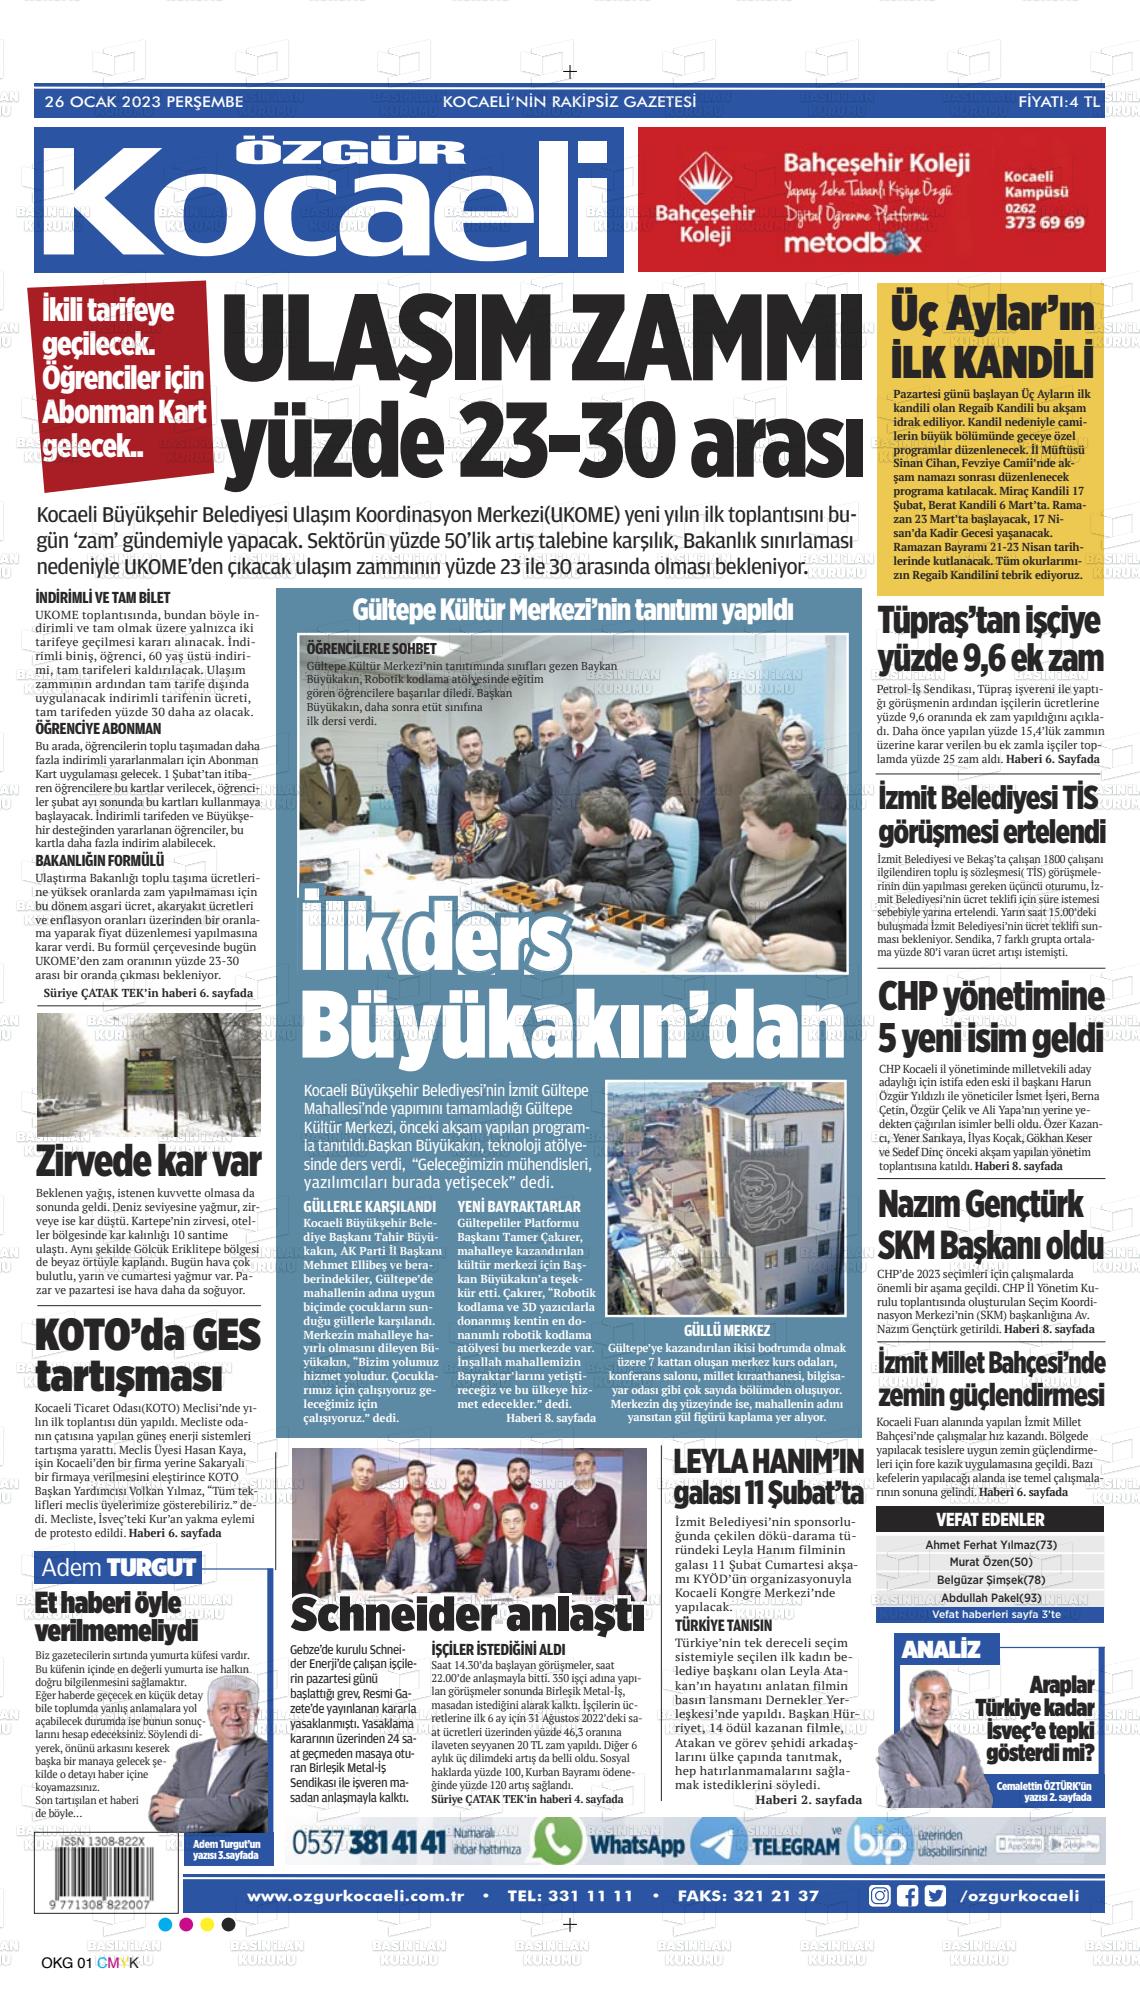 26 Ocak 2023 Özgür Kocaeli Gazete Manşeti